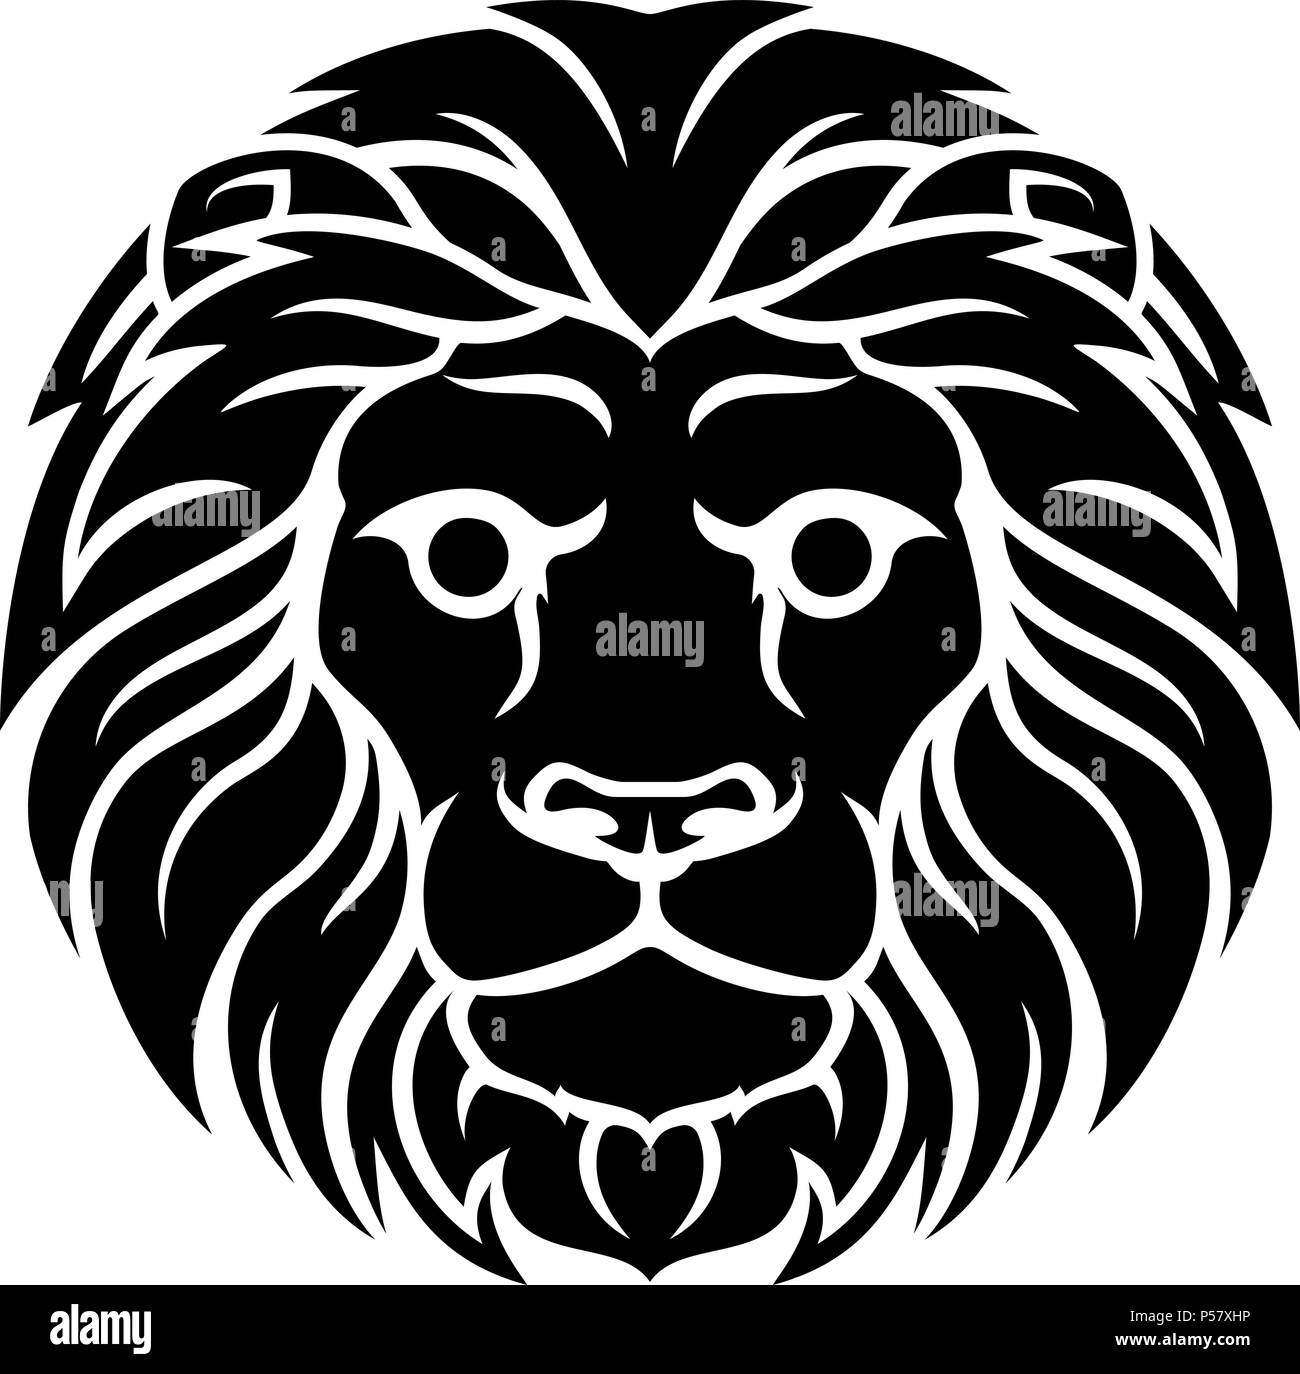 Lion Leo Zodiac Astrology Sign Stock Vector